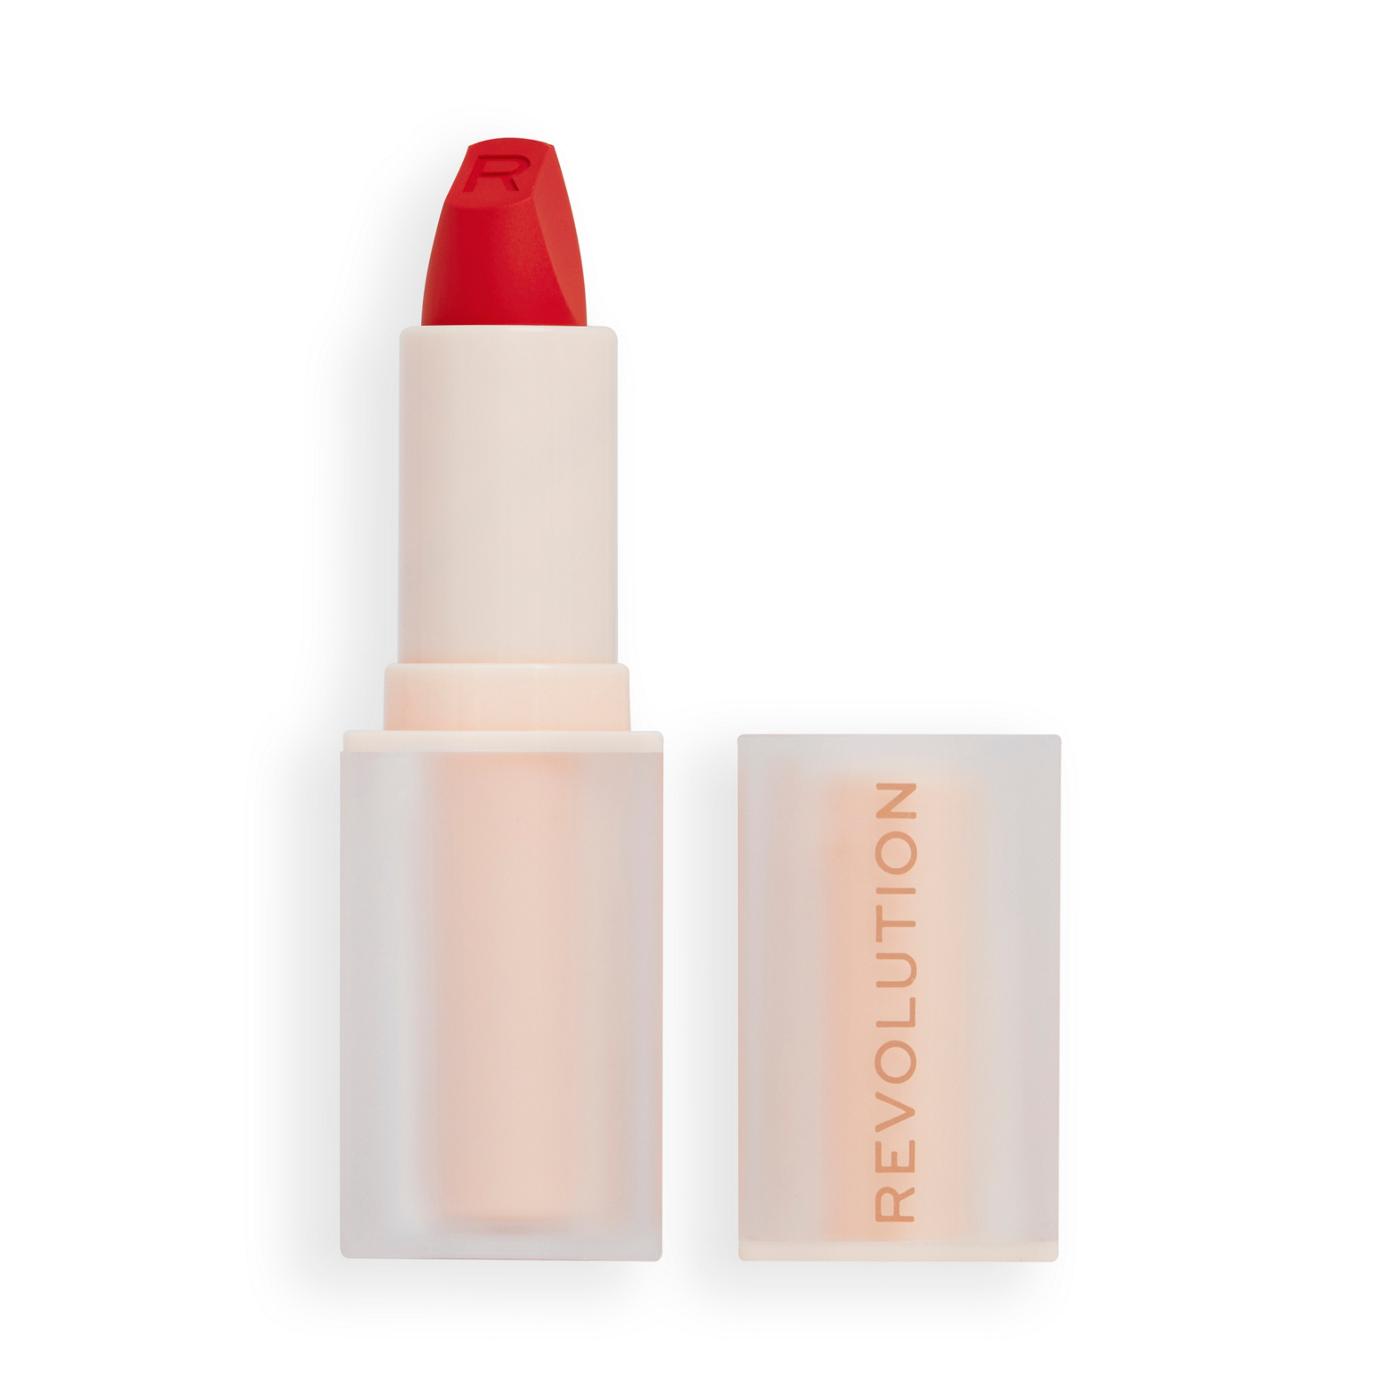 Makeup Revolution Lip Allure Soft Satin Lipstick - Vibe Red; image 2 of 2